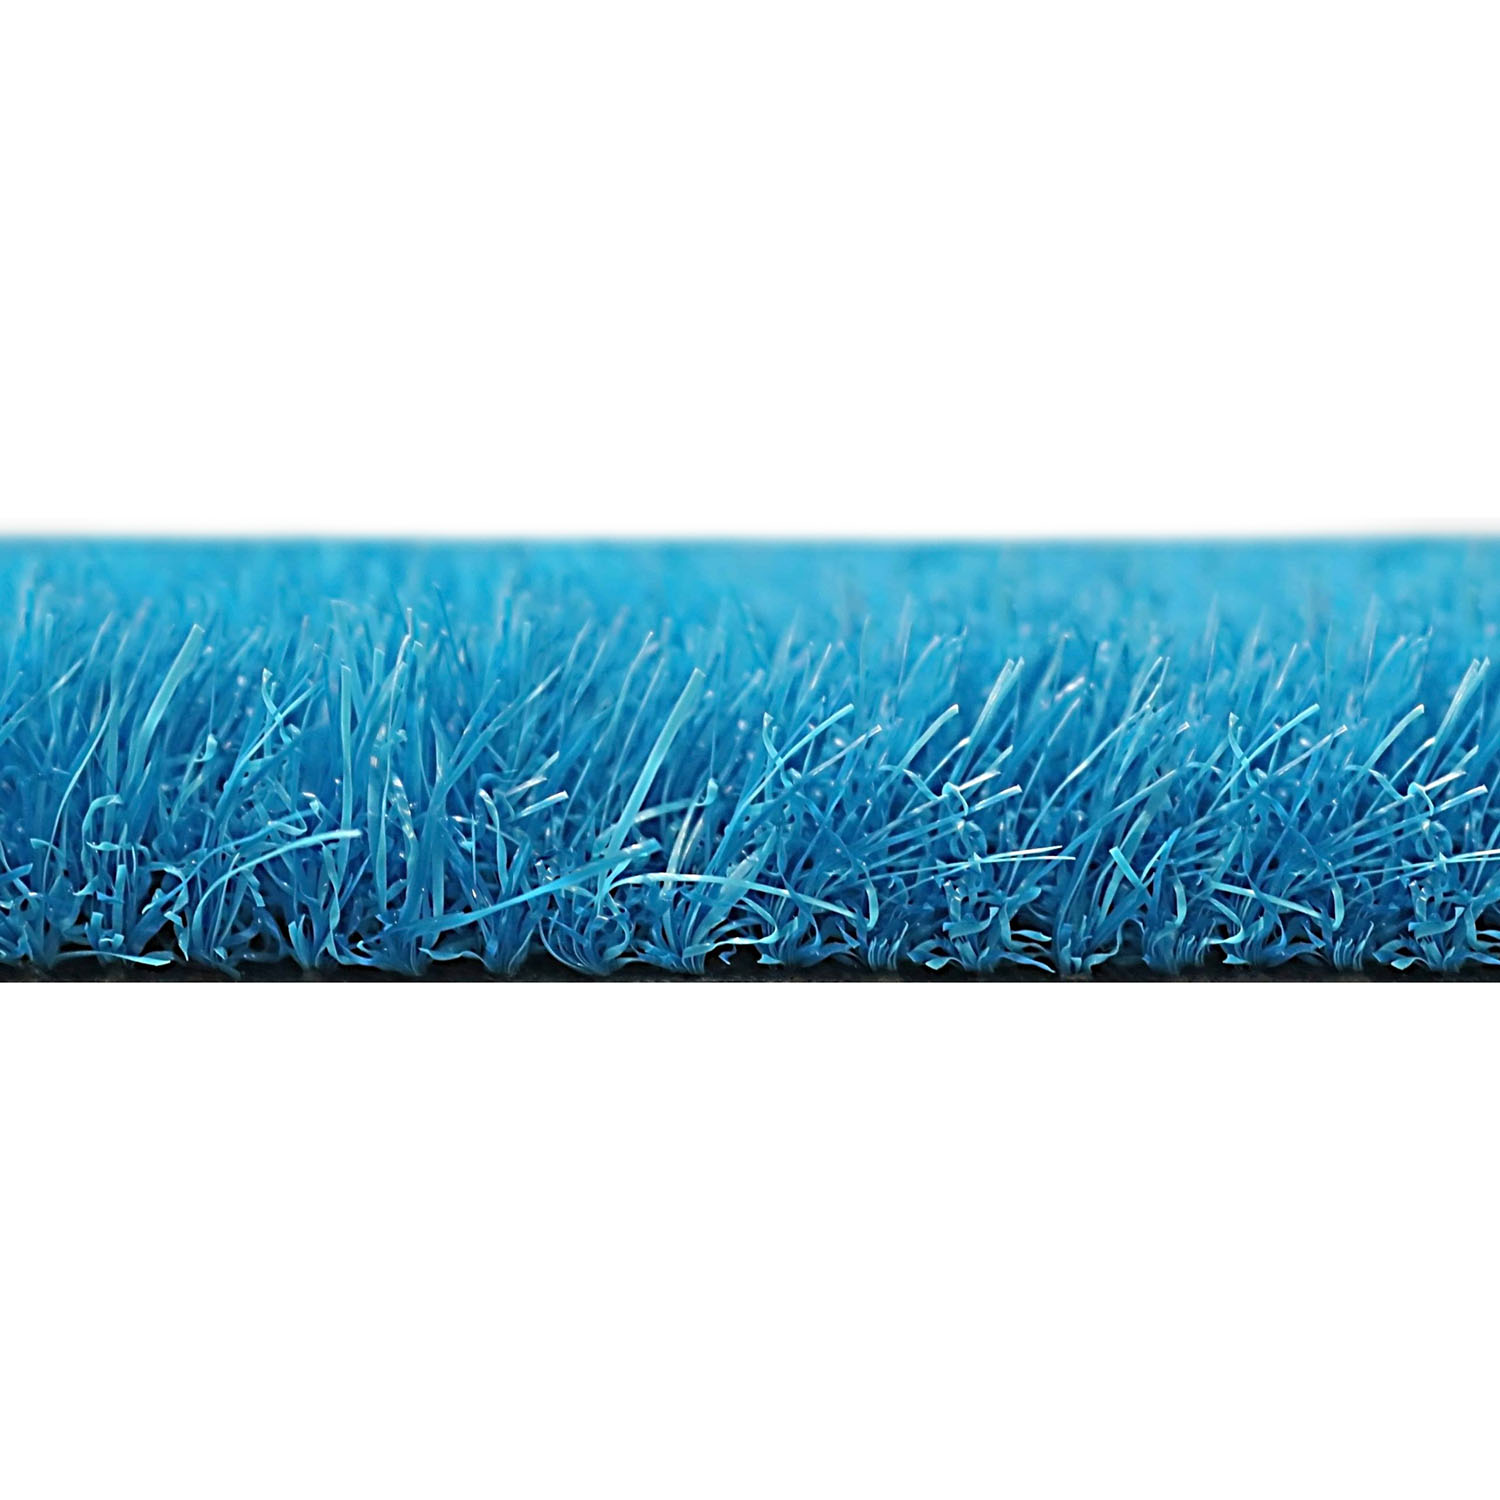 aspen-47-mallorca-grass(1080x720)